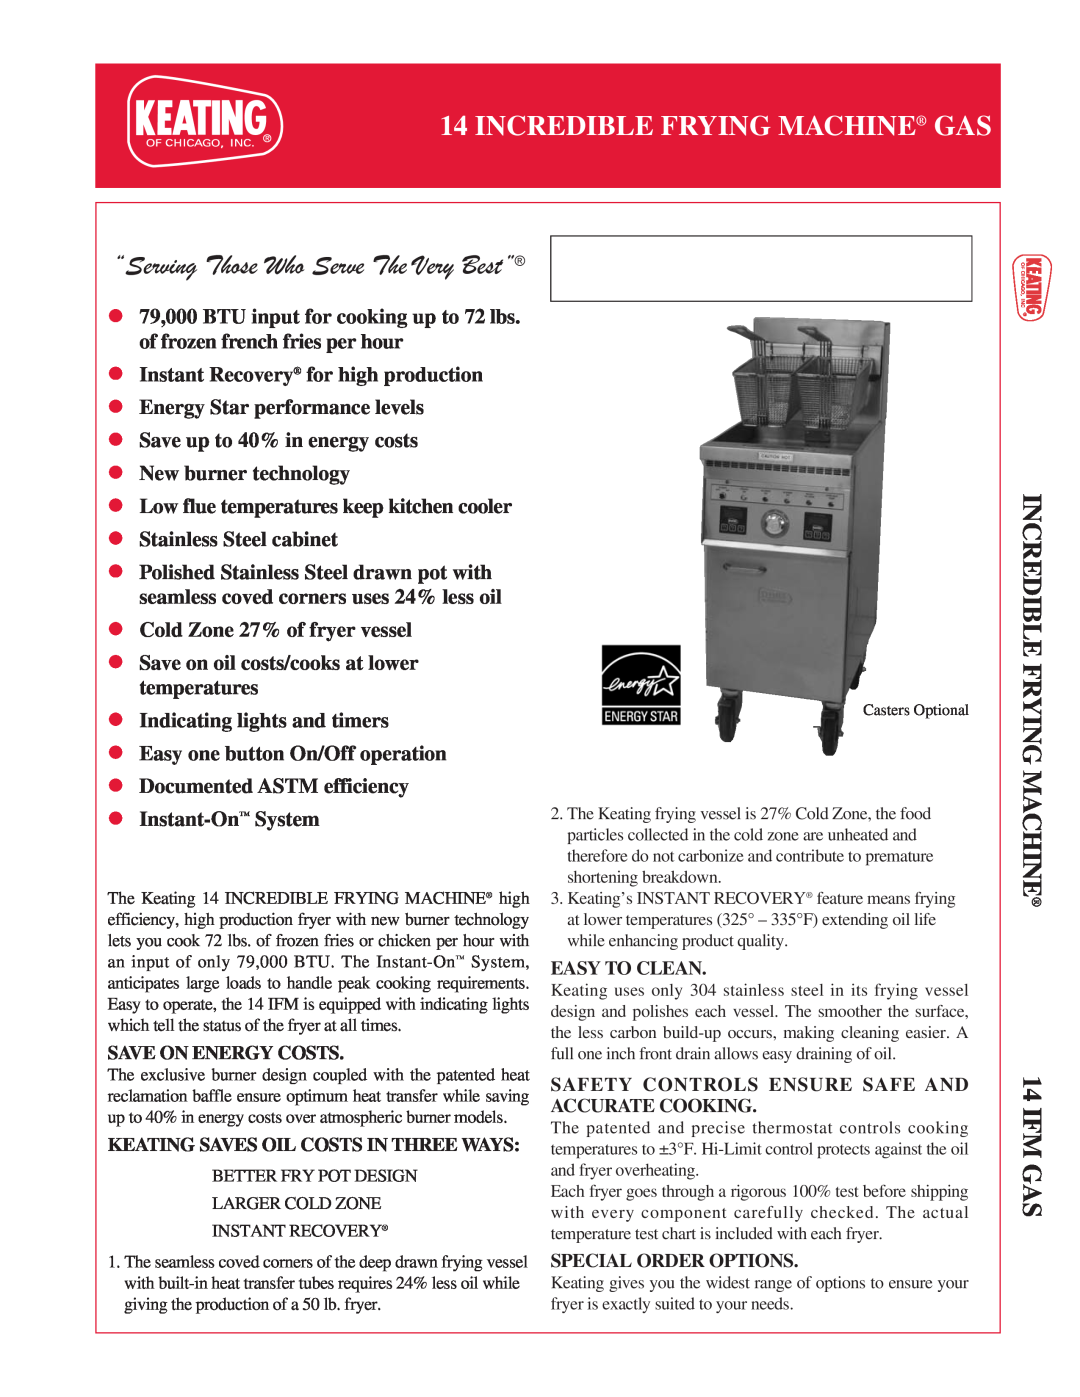 Keating Of Chicago 14IFM manual Incredible Frying Machine Gas, INCREDIBLE FRYING MACHINE 14 IFM GAS 